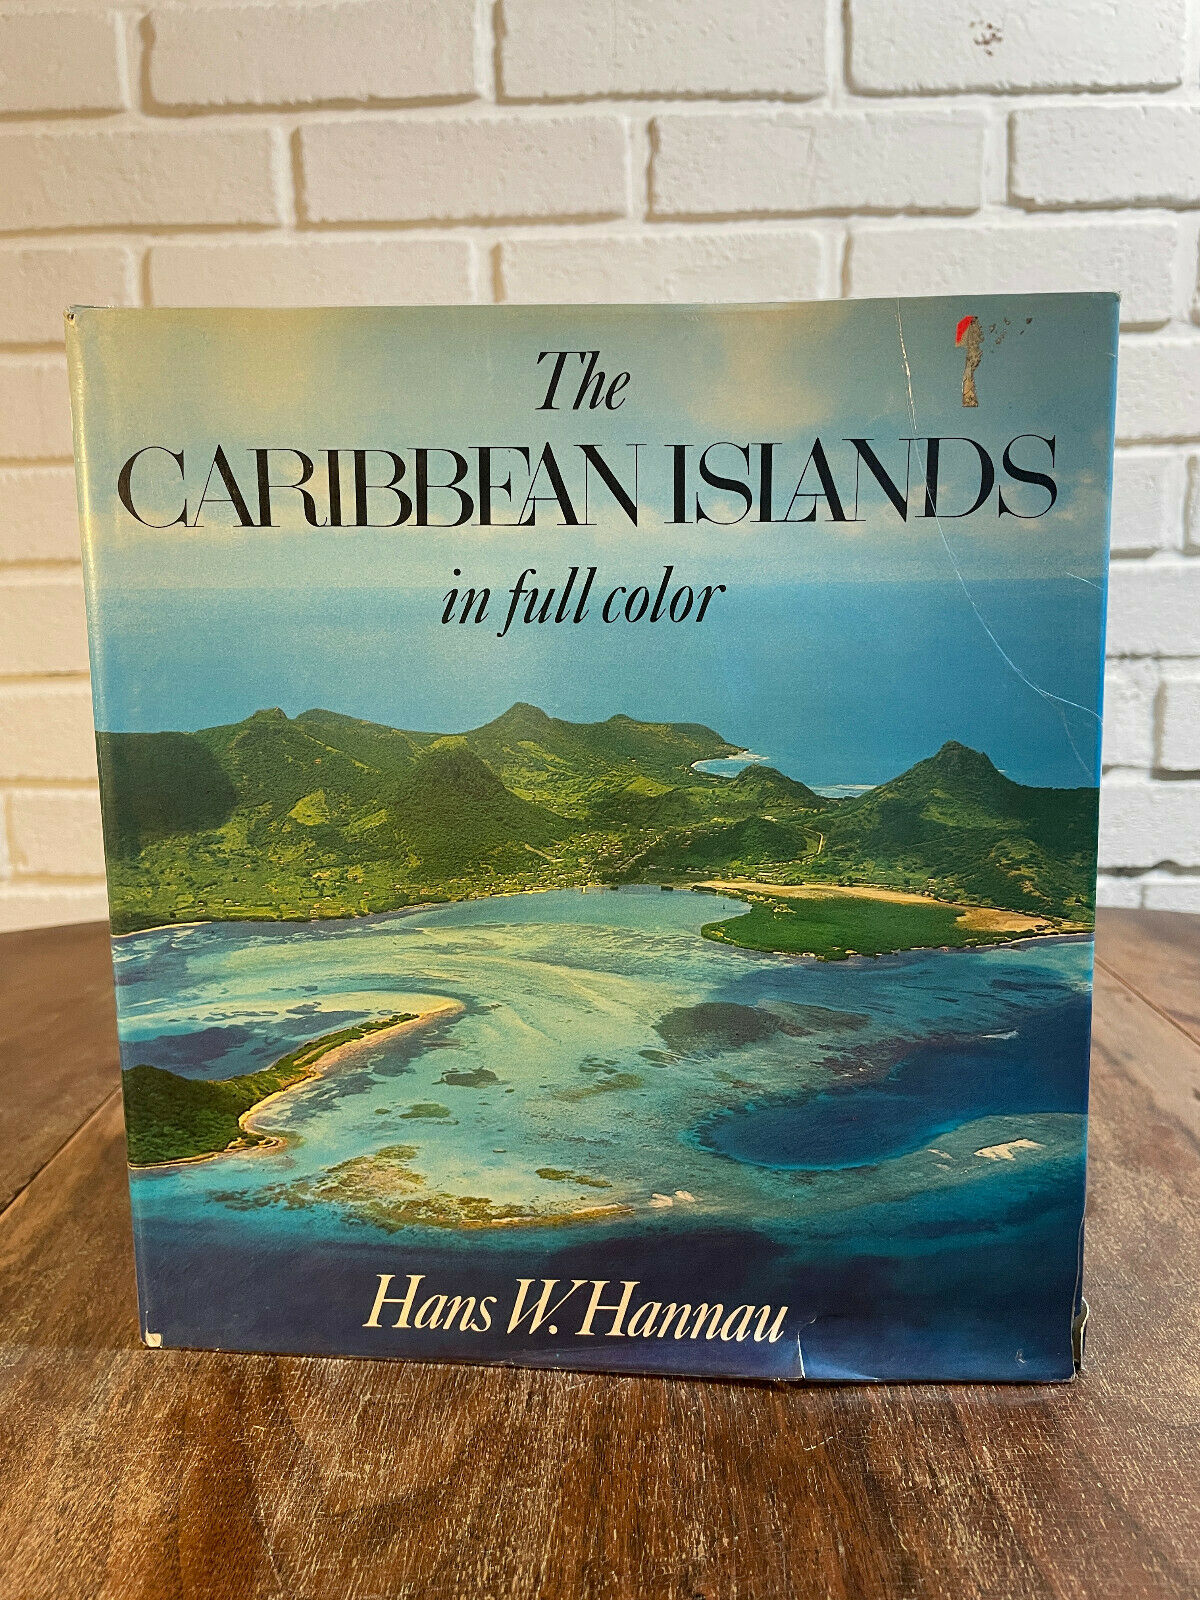 The Caribbean Islands in Full Color by Hans W. Hannau (4A)